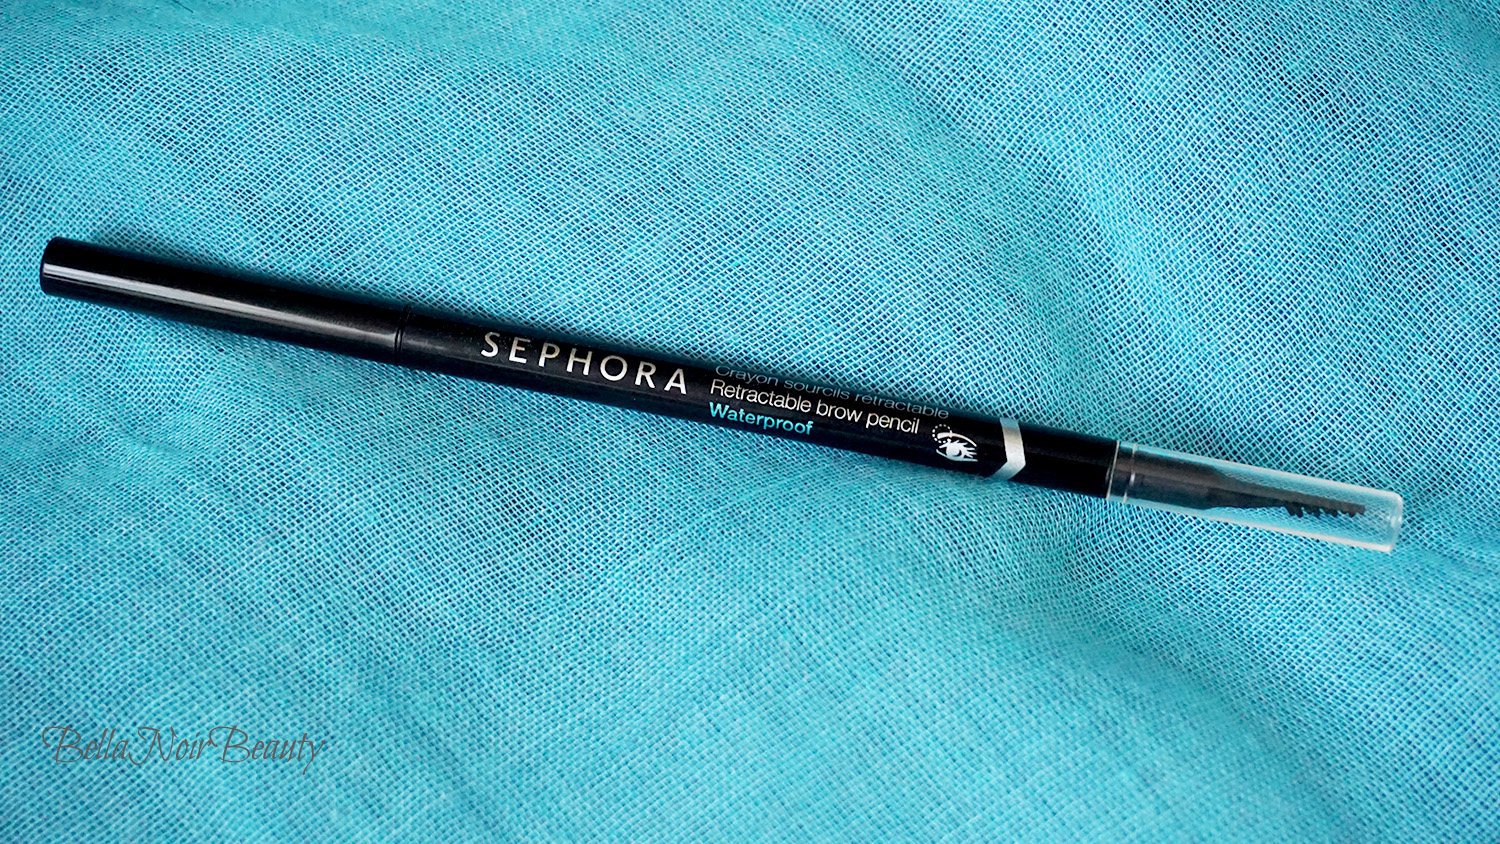 Sephora Retractable Brow Pencil | bellanoirbeauty.com